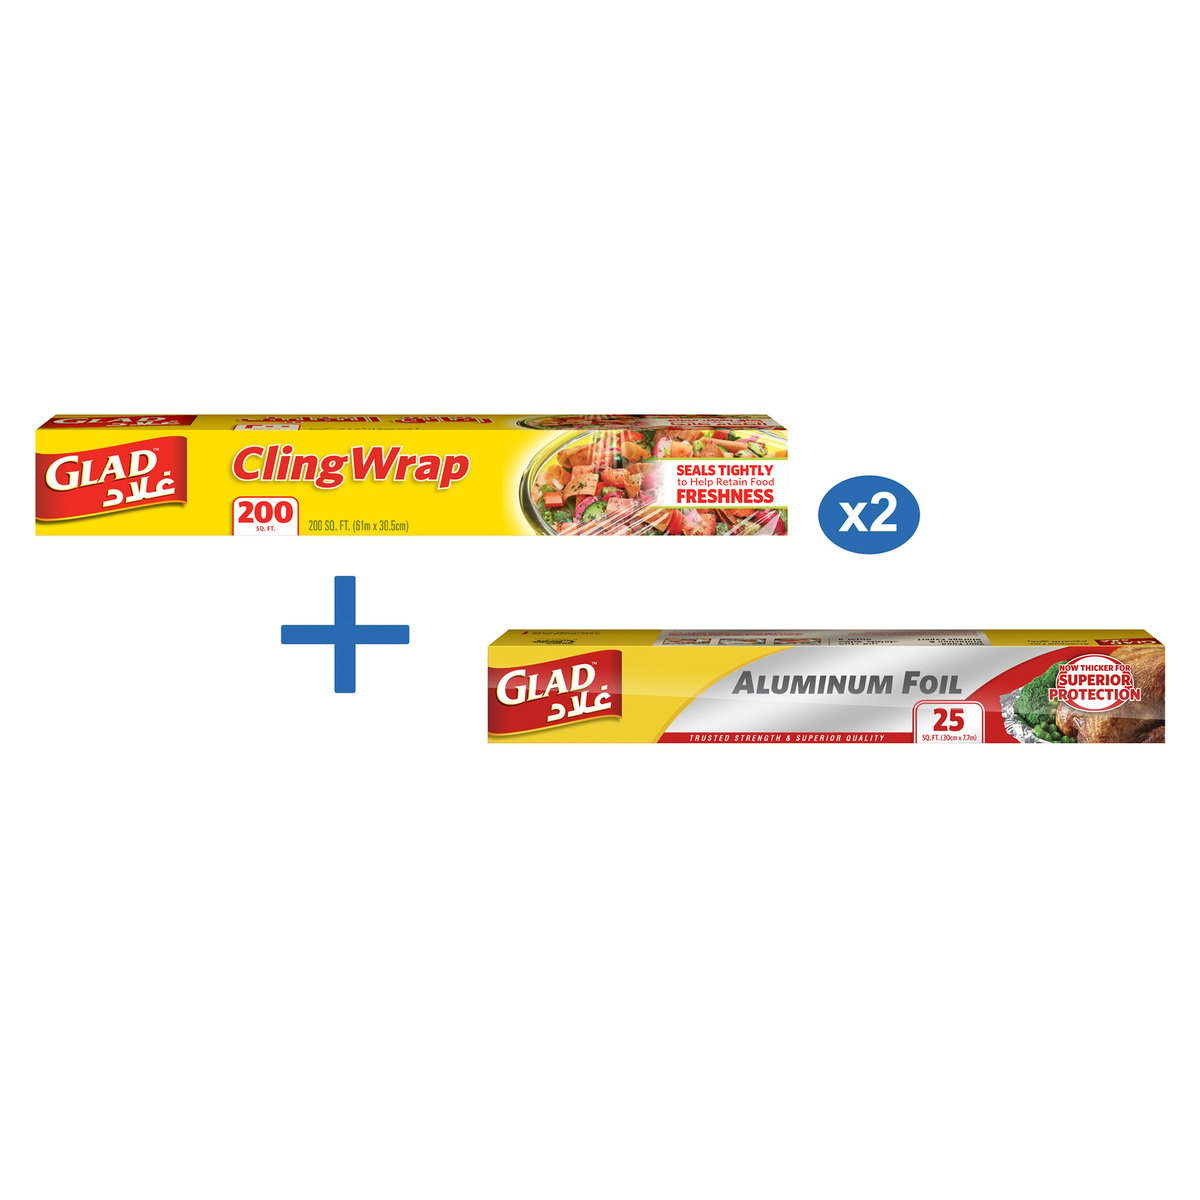 Glad Cling Wrap Clear Plastic Loop 200 sq.ft 2pcs + Offer